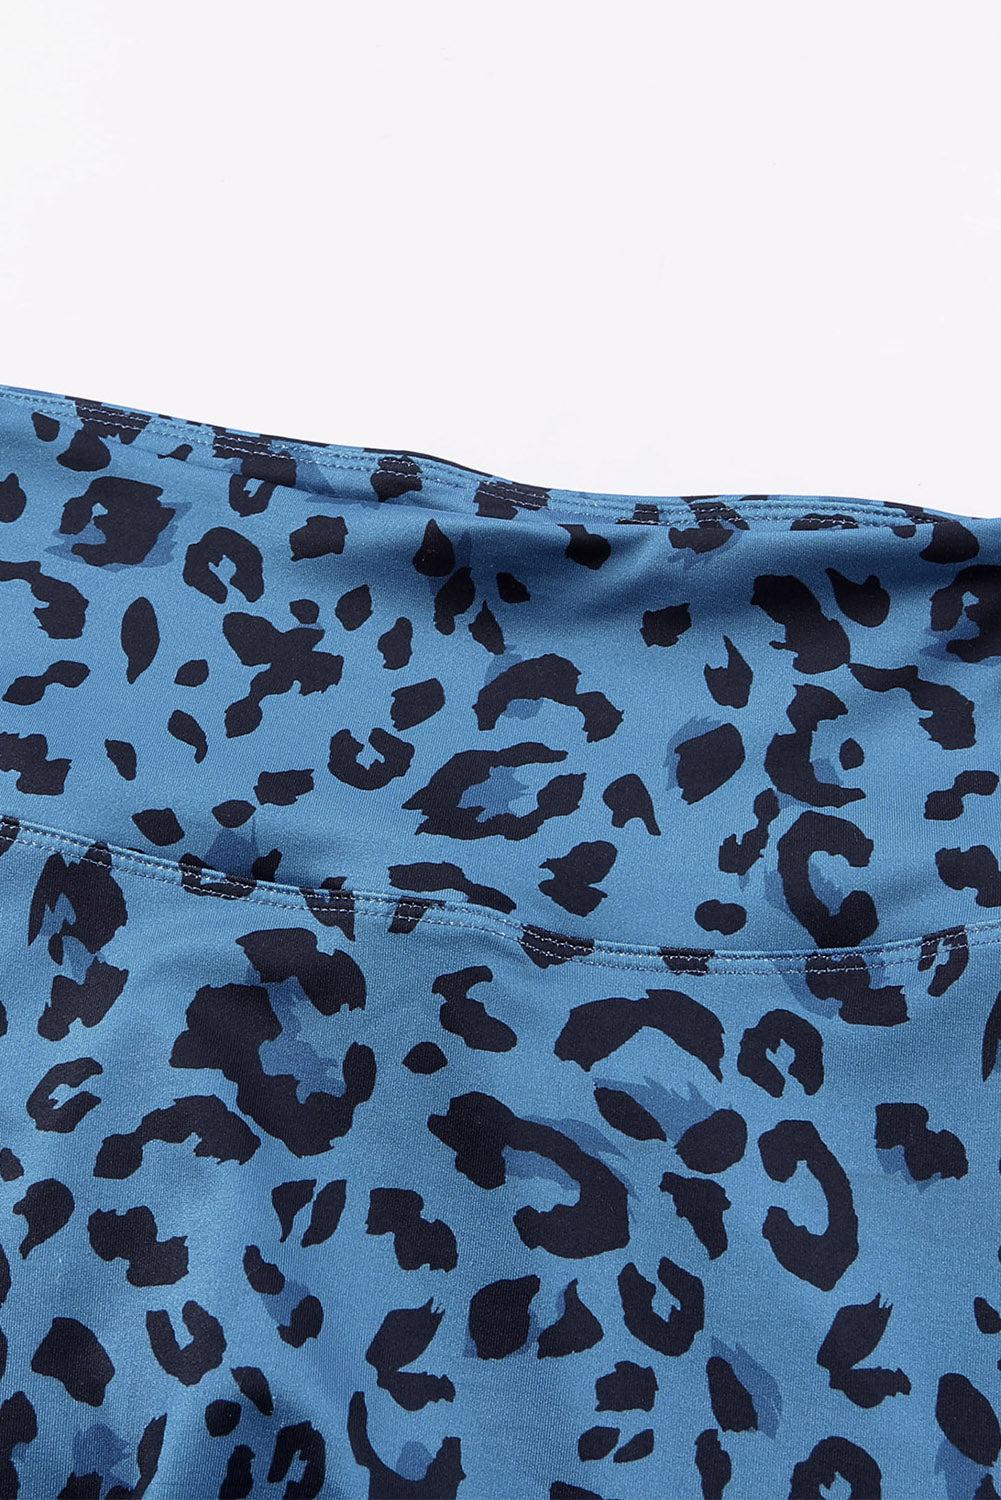 Leopard Print Wide Waistband Leggings BLUE ZONE PLANET